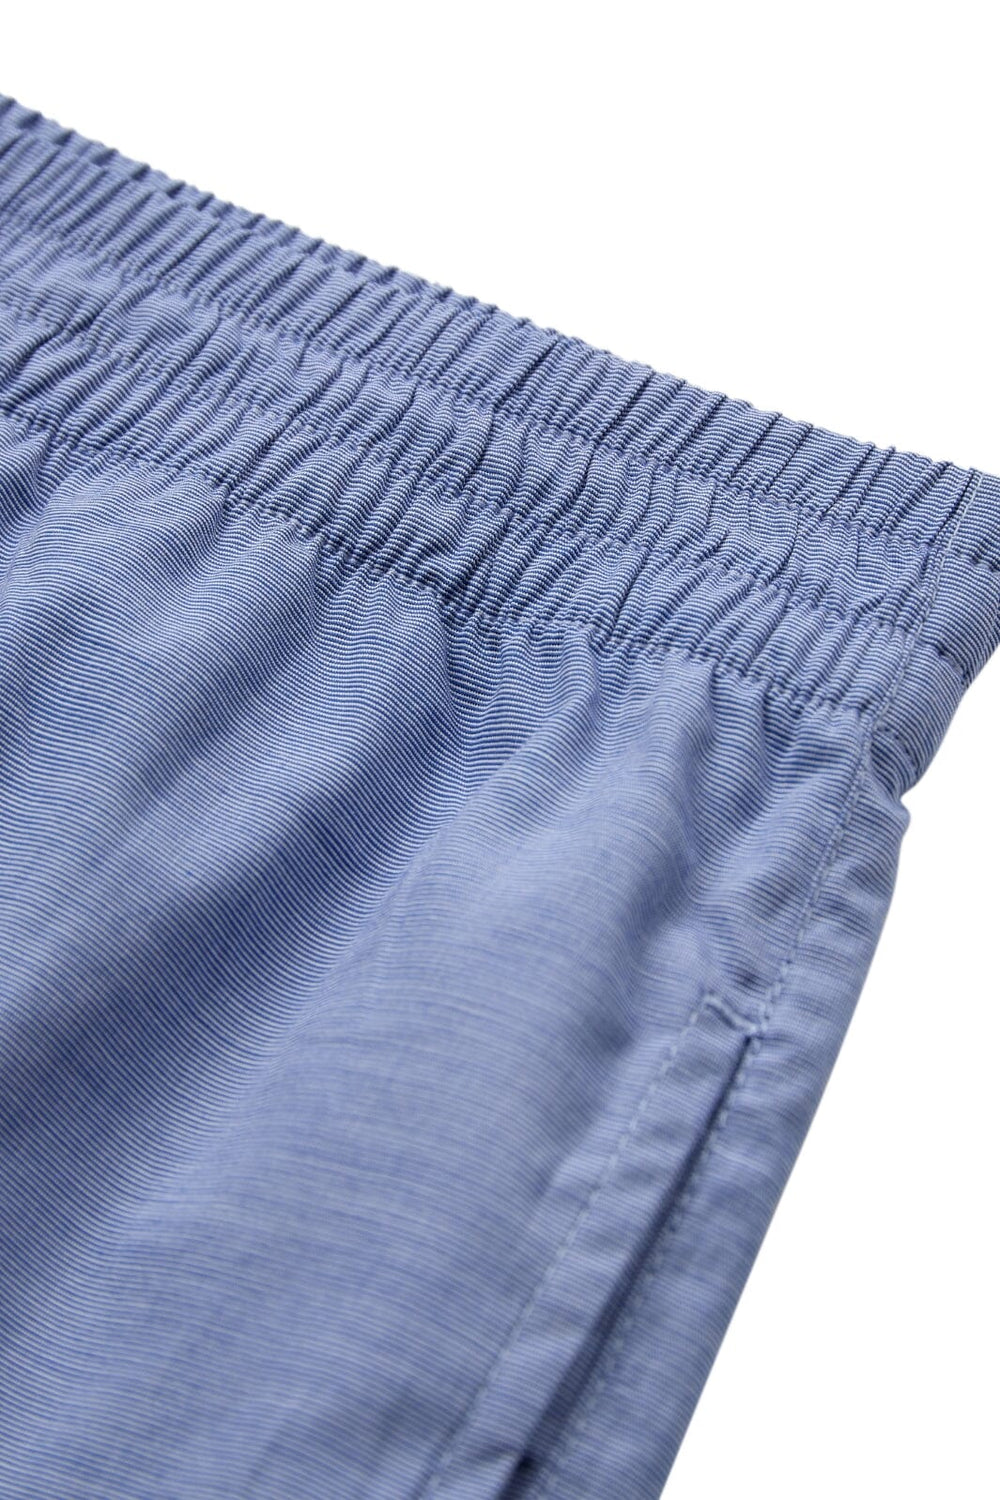 Forudbestilling - H2O - Rønne Essential Pajamas Shorts - 2610 Blue Shorts 